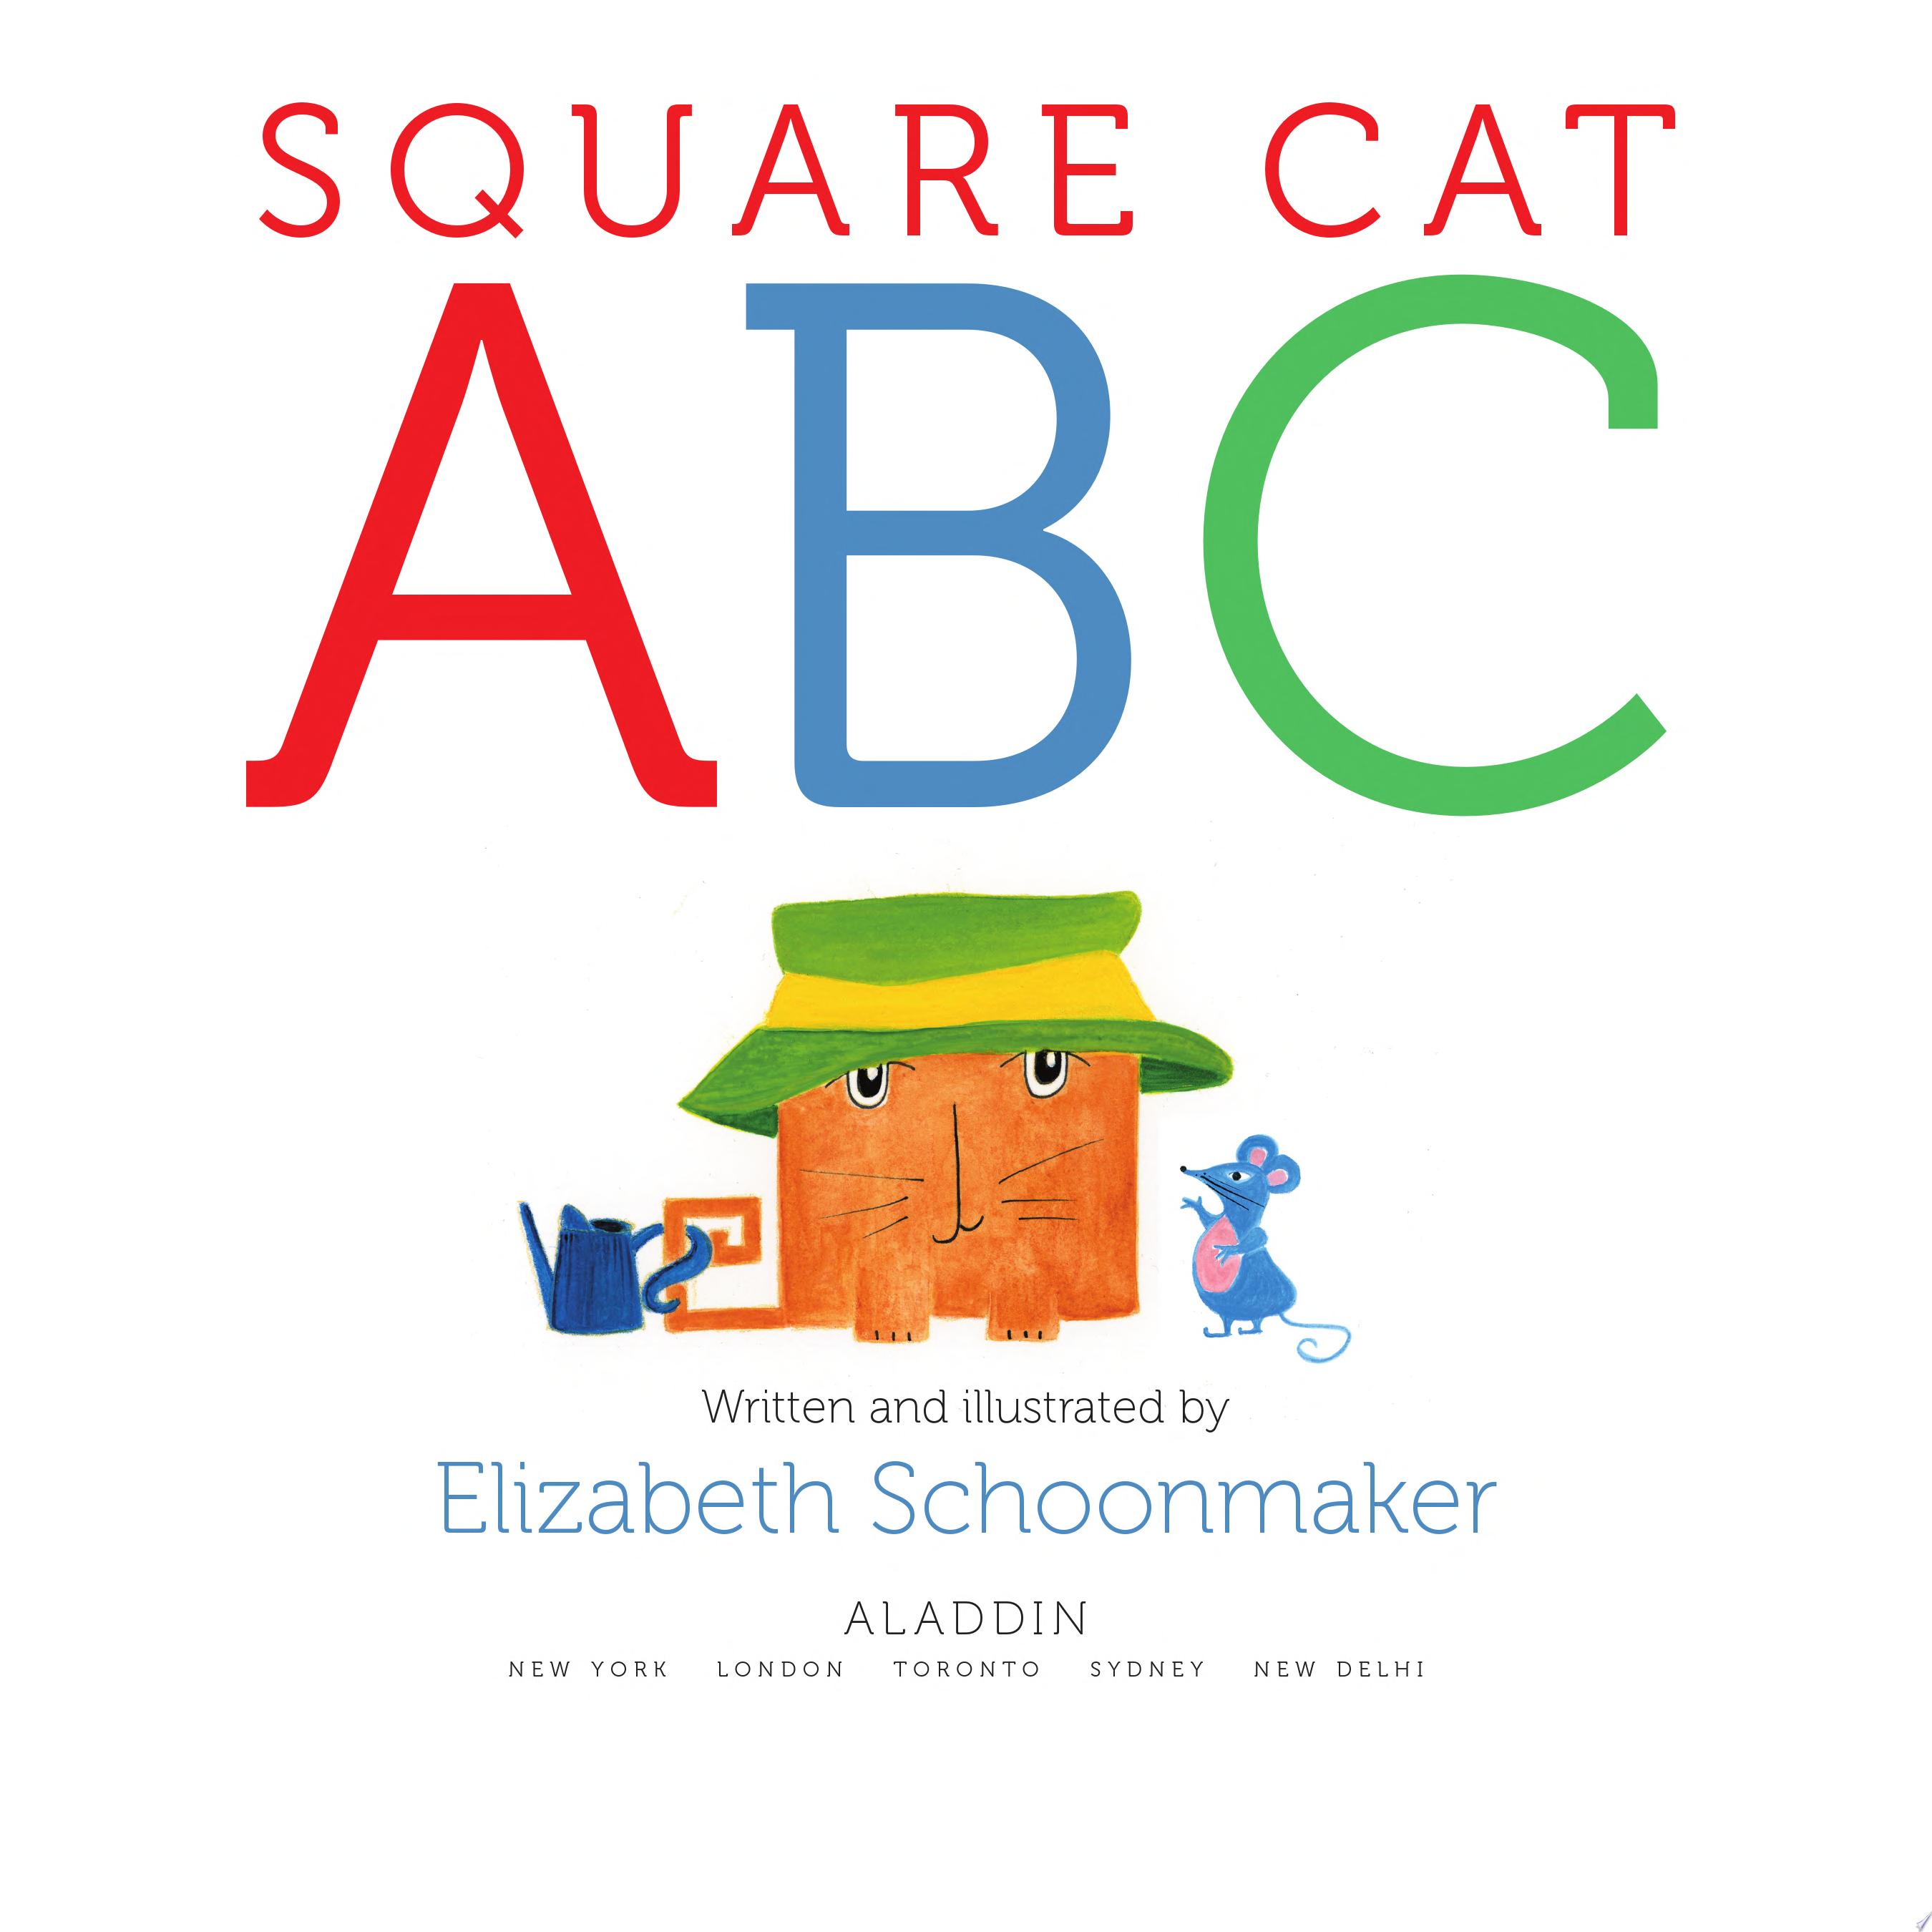 Image for "Square Cat ABC"